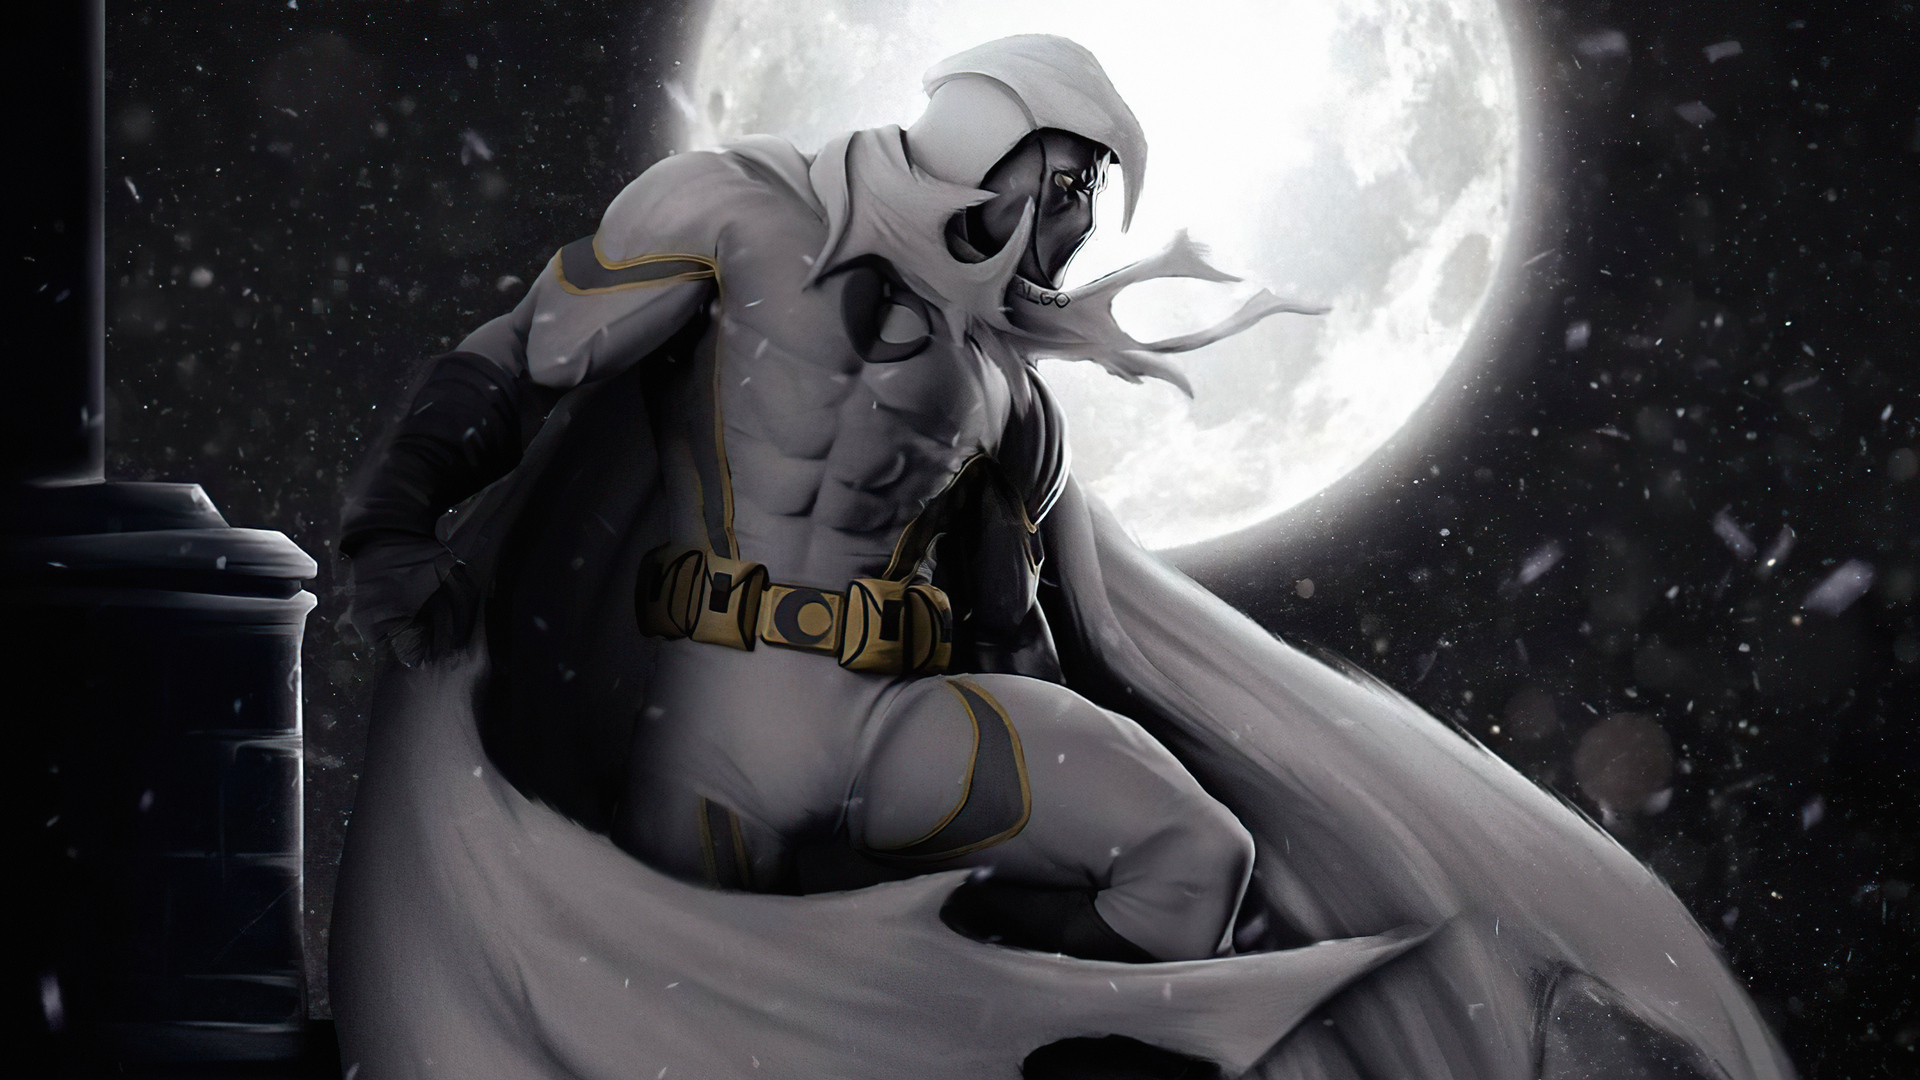 Moon Knight Superhero Digital Art Wallpaper Hd Superheroes 4k Wallpapers Im...